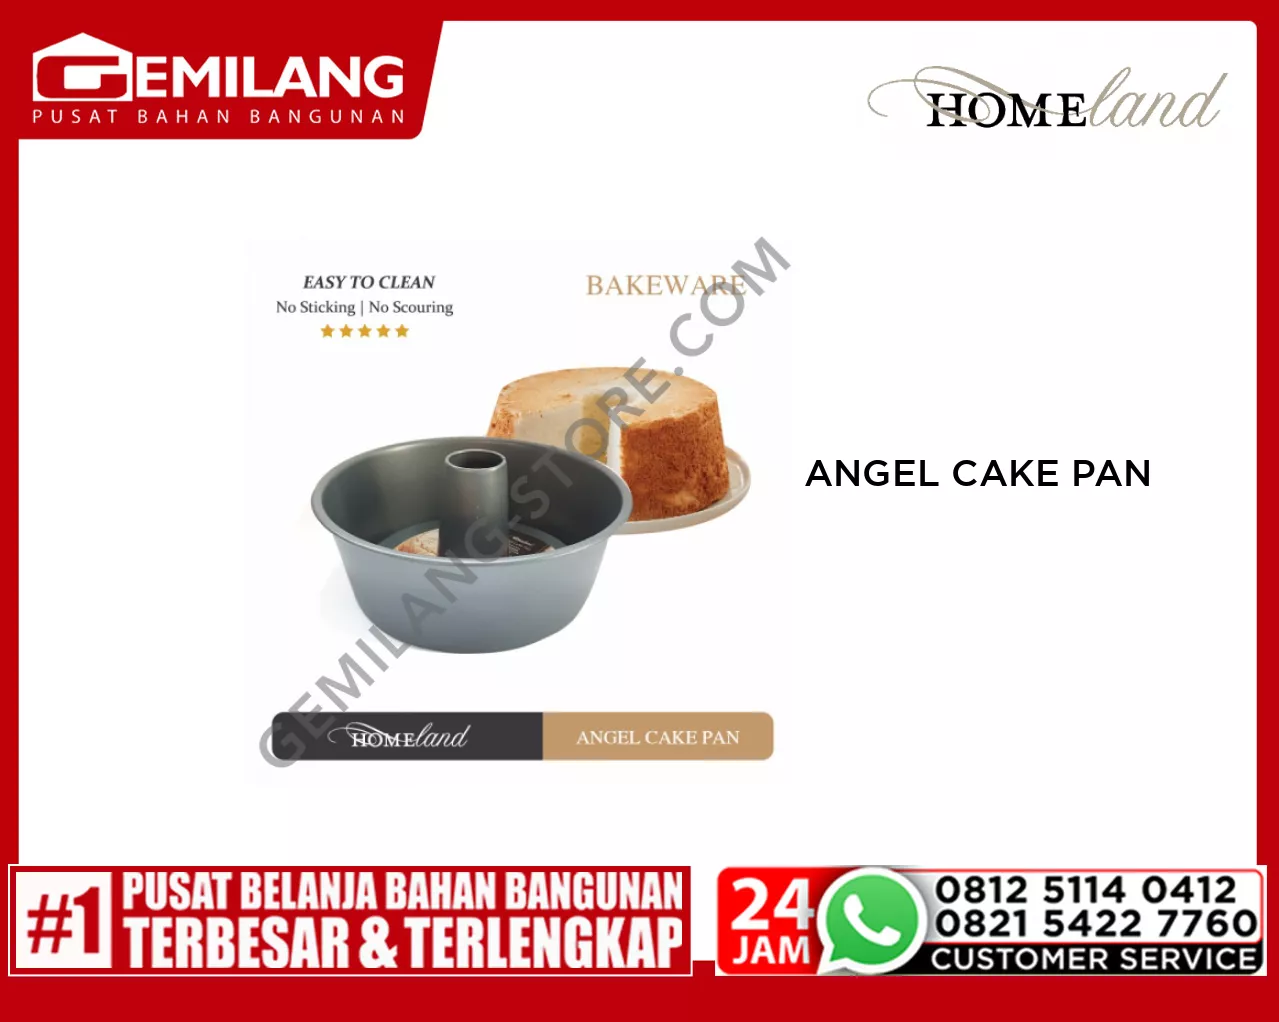 HOMELAND ANGEL CAKE PAN GREY